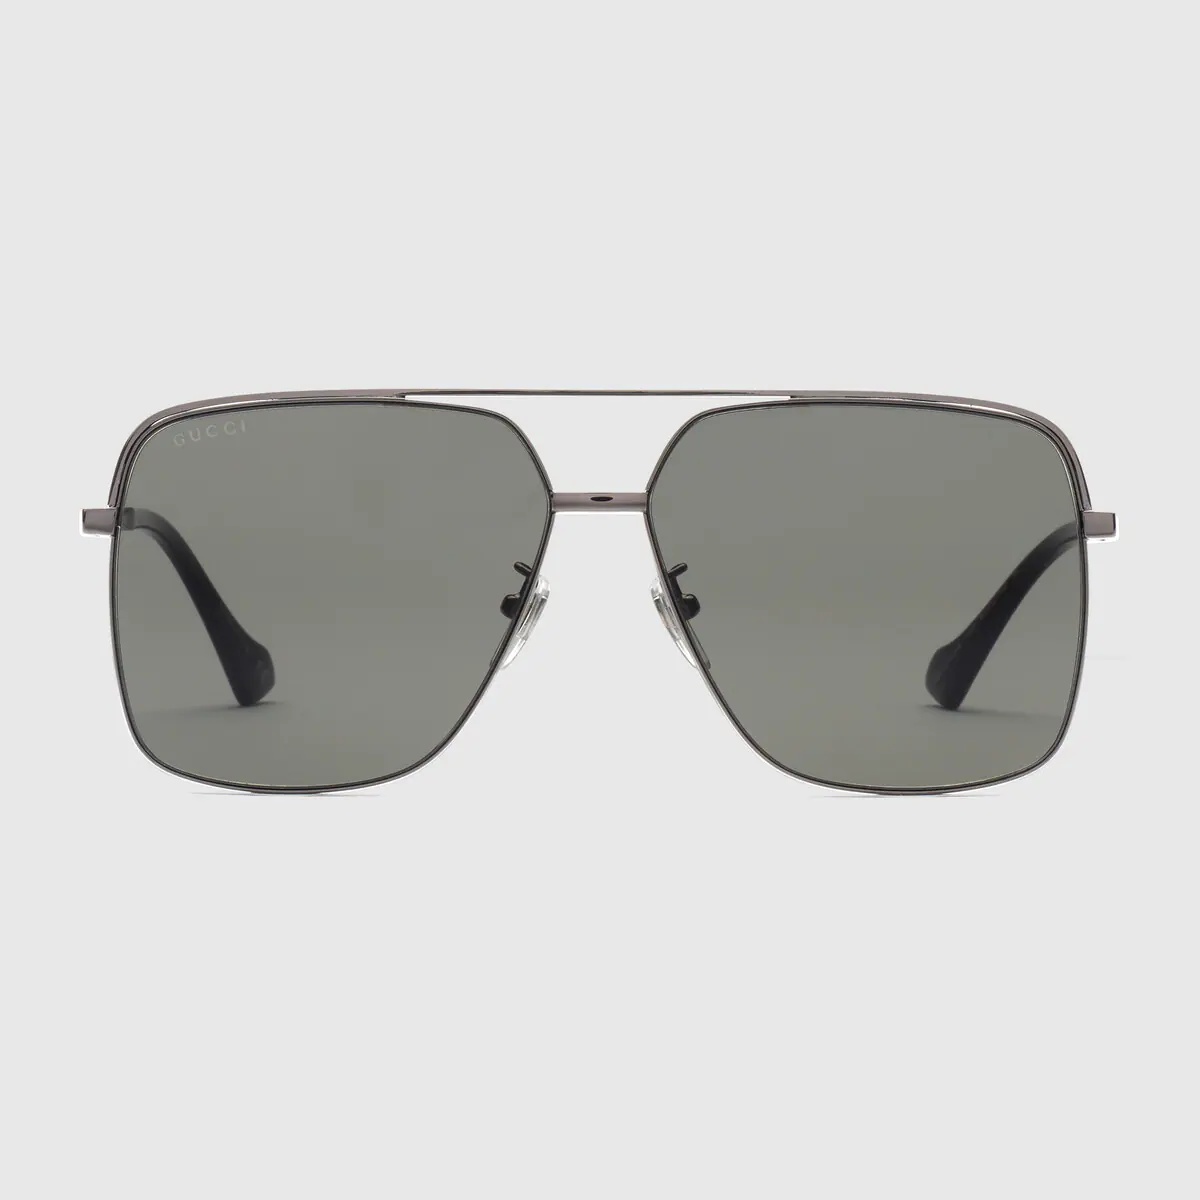 Specialized fit navigator sunglasses - 1